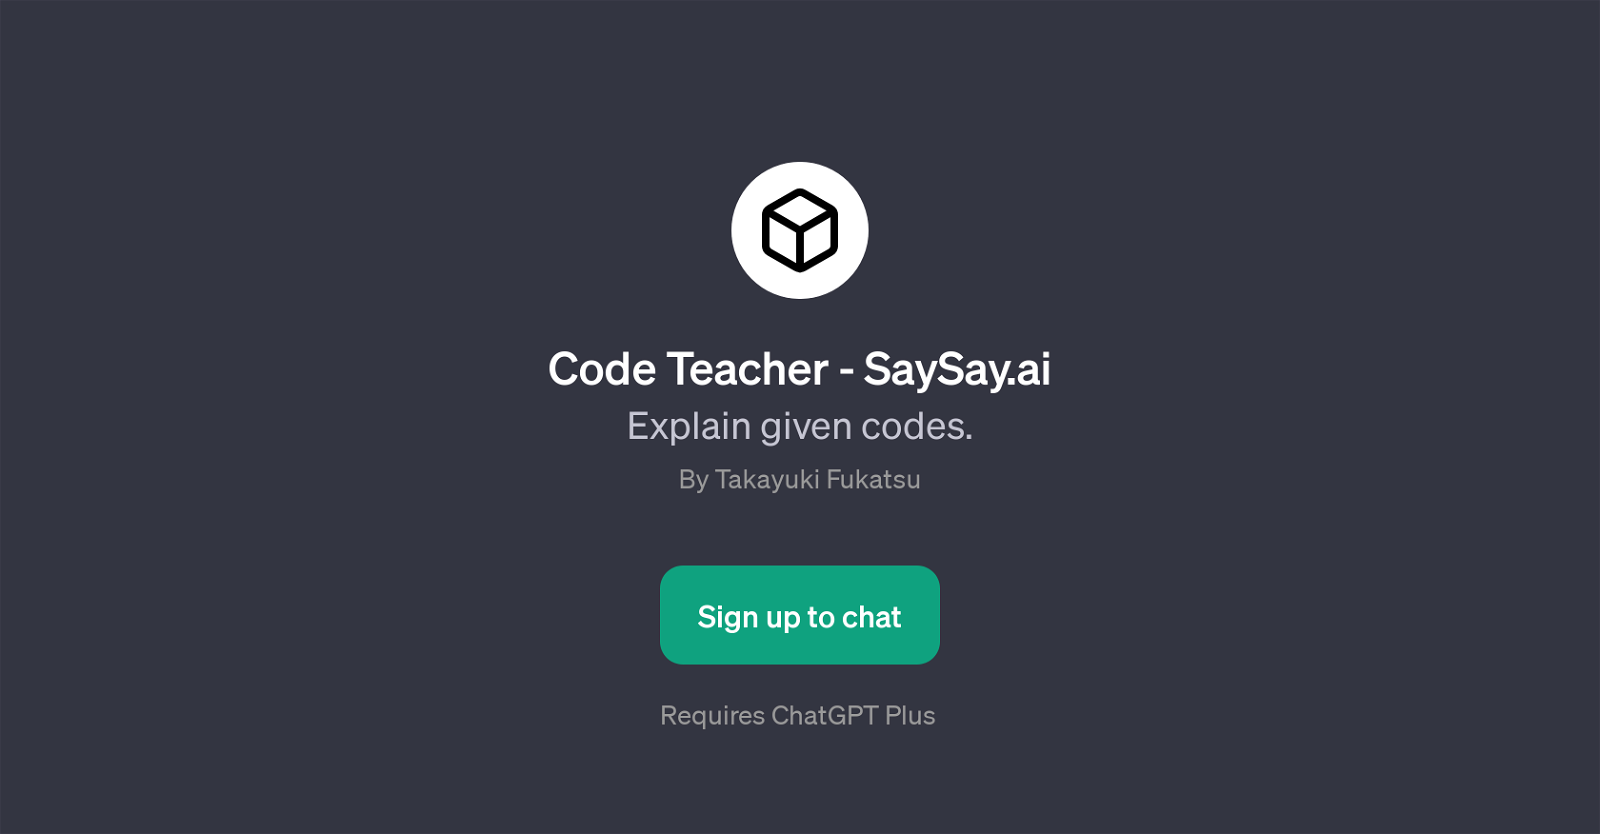 Code Teacher website